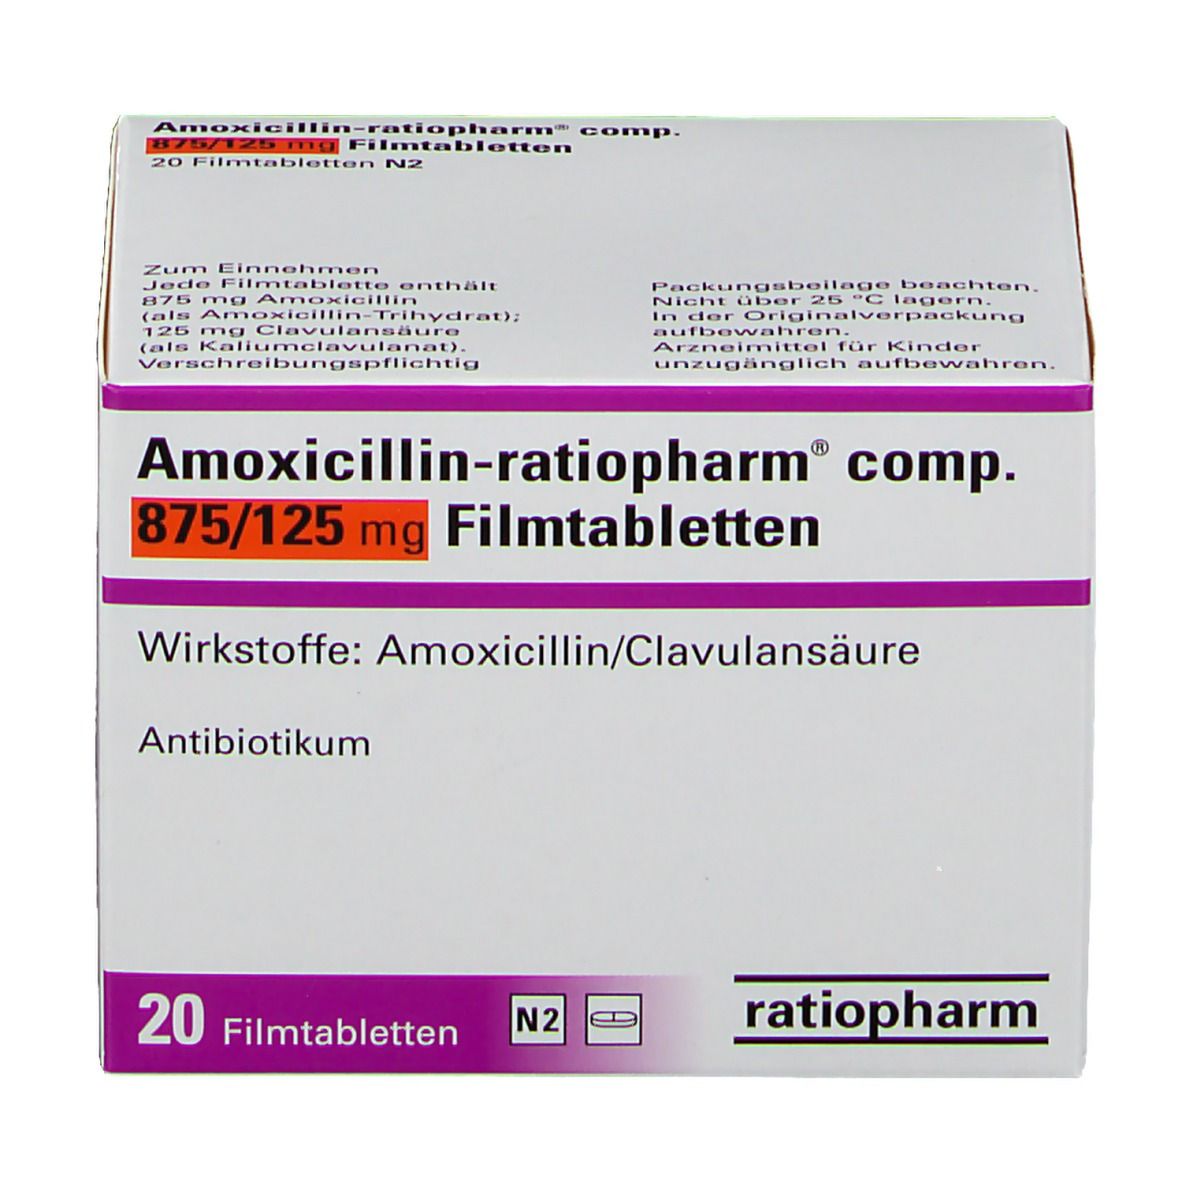 Amoxicillin-ratiopharm comp. 875/125 mg